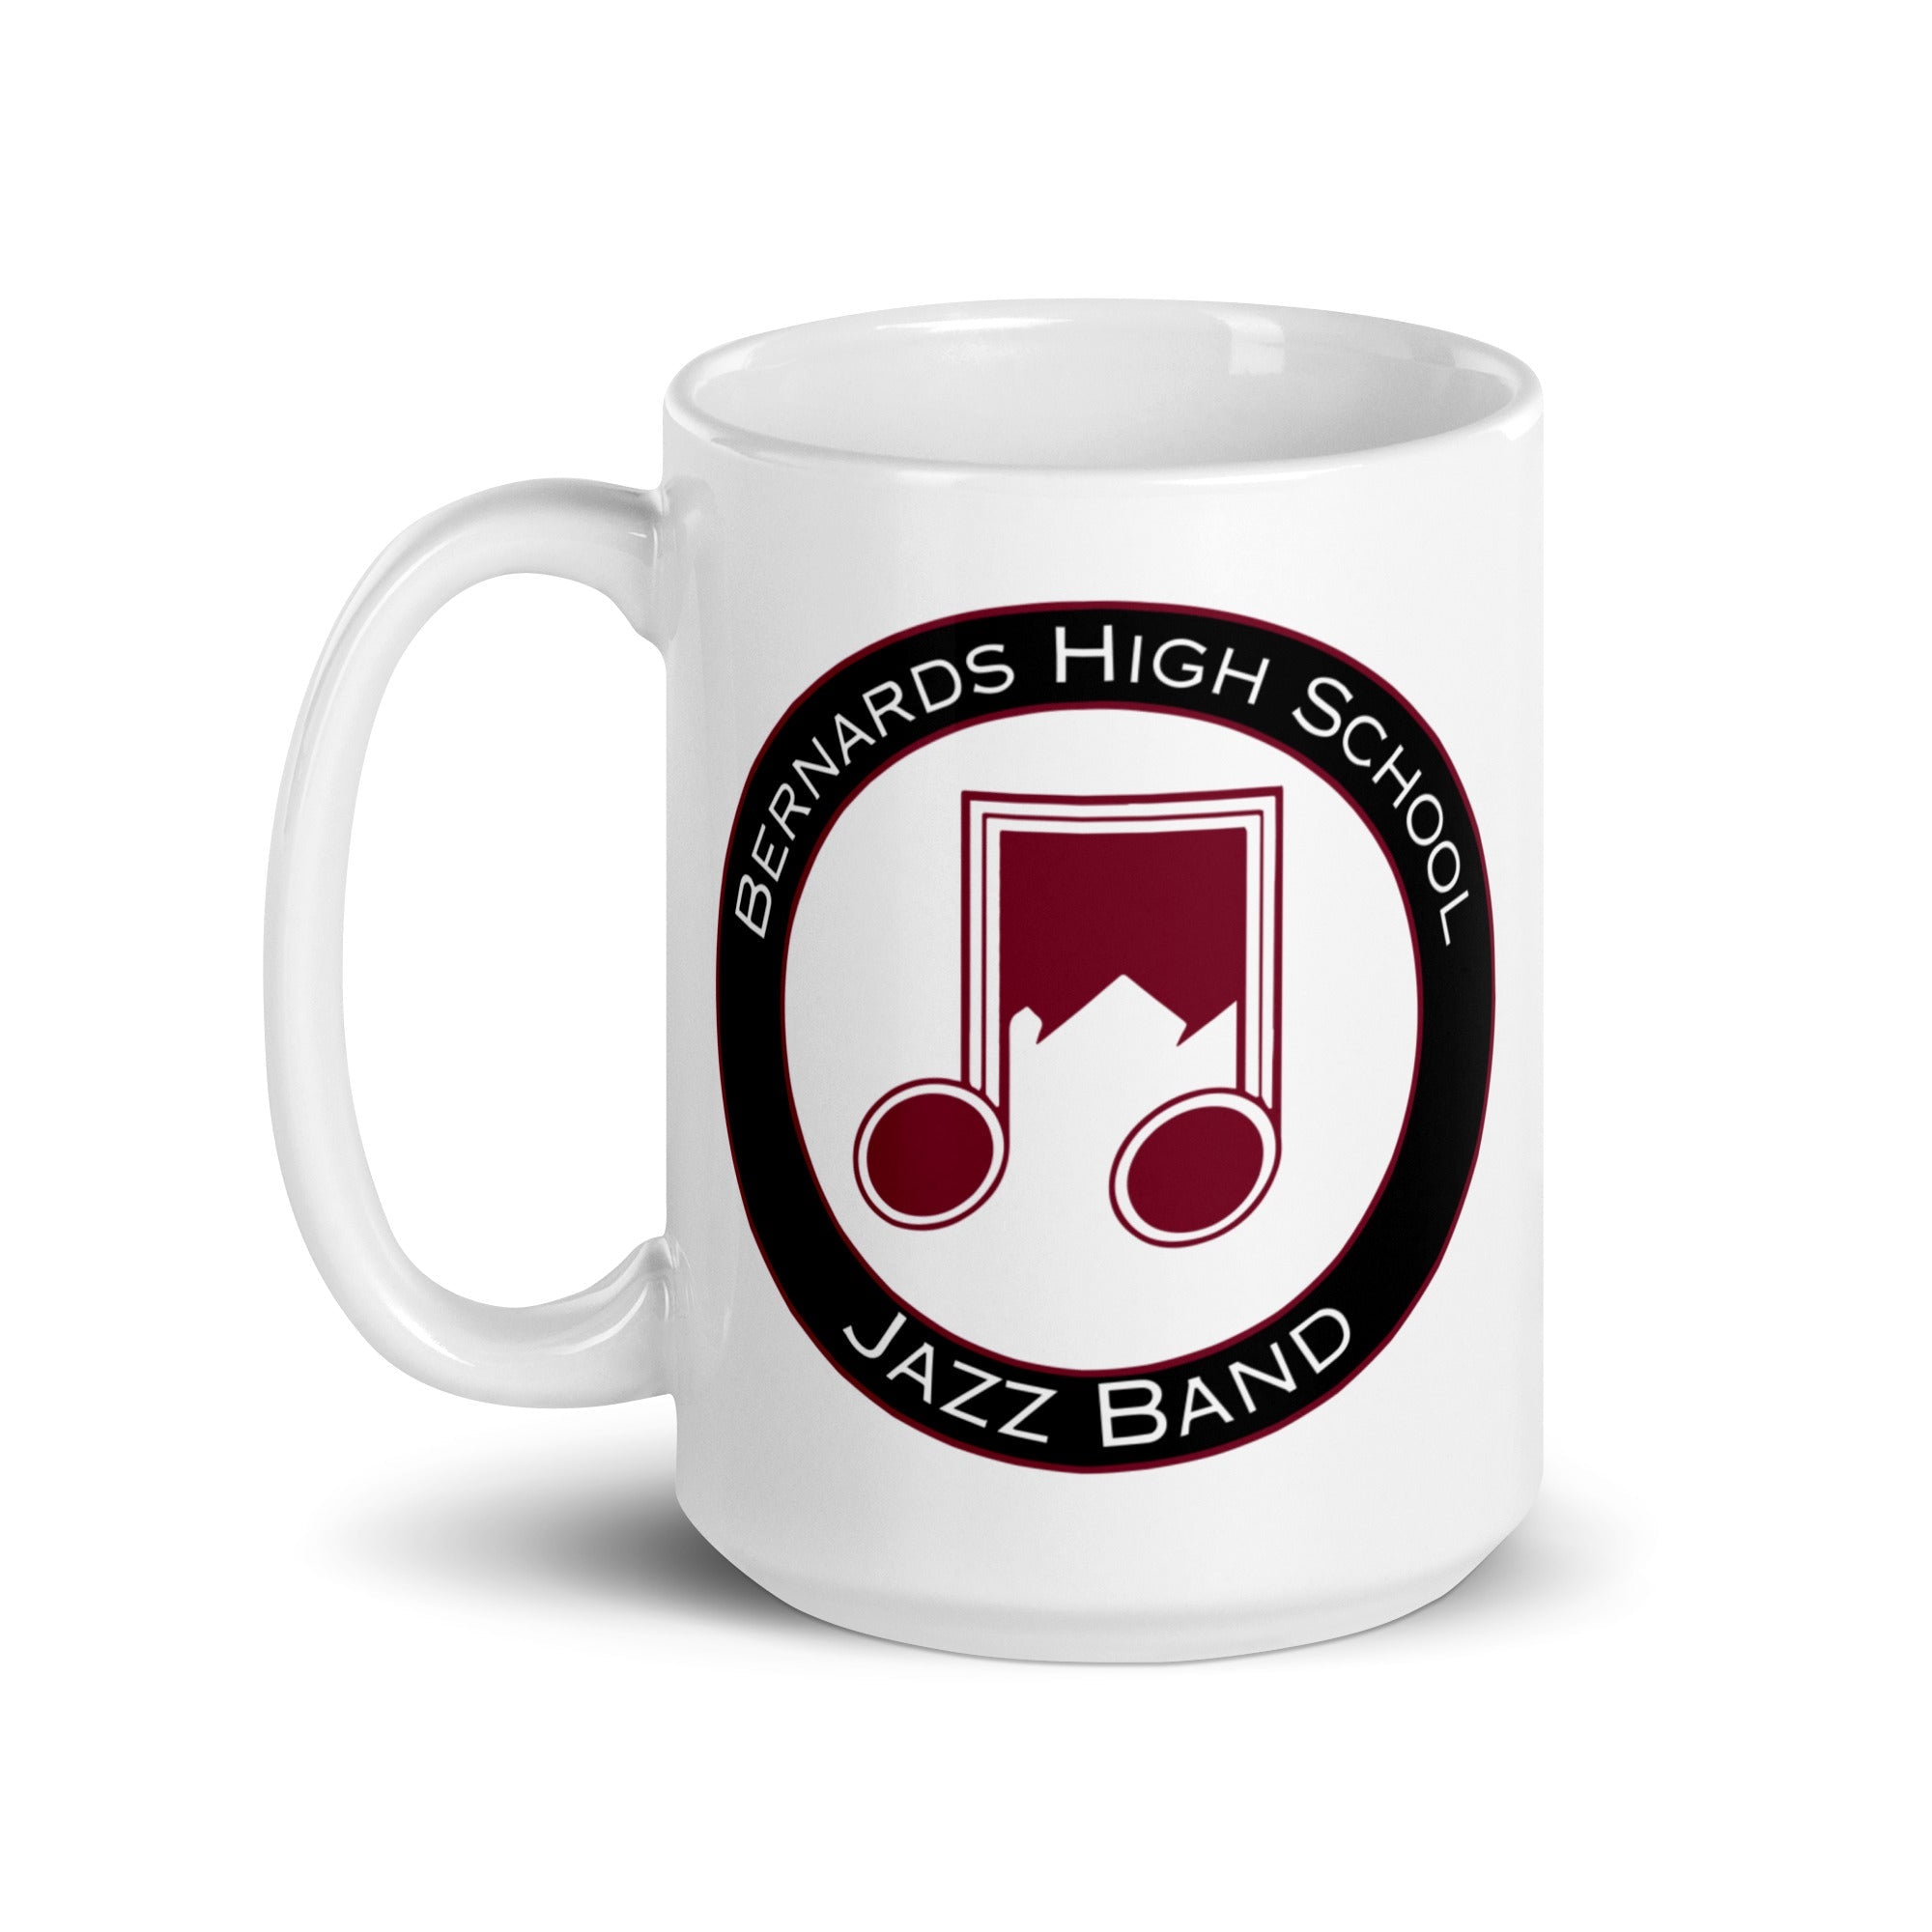 BHS Band Jazz White glossy mug